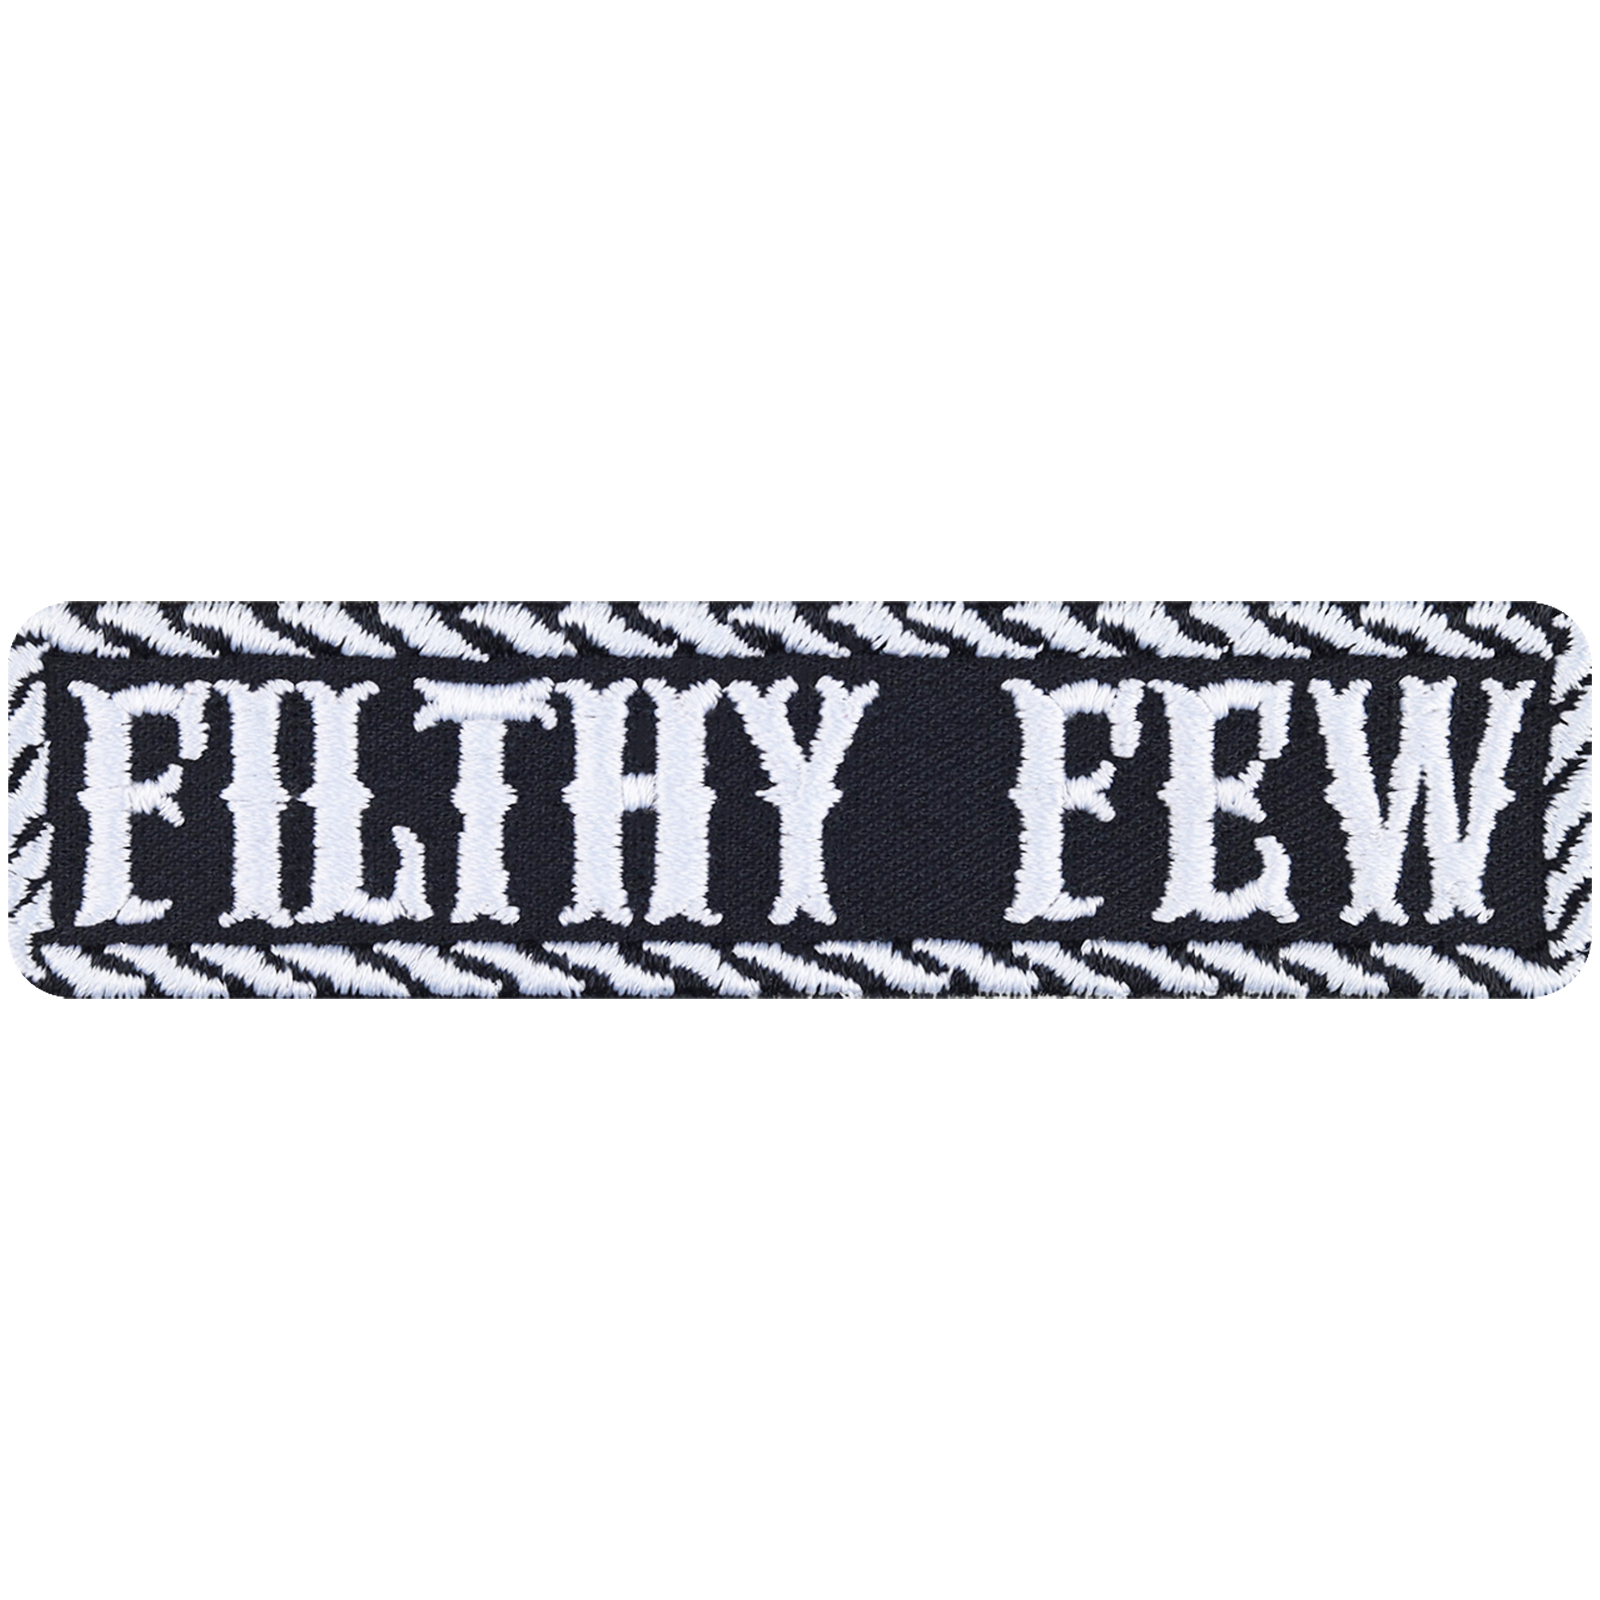 Filthy few - Patch